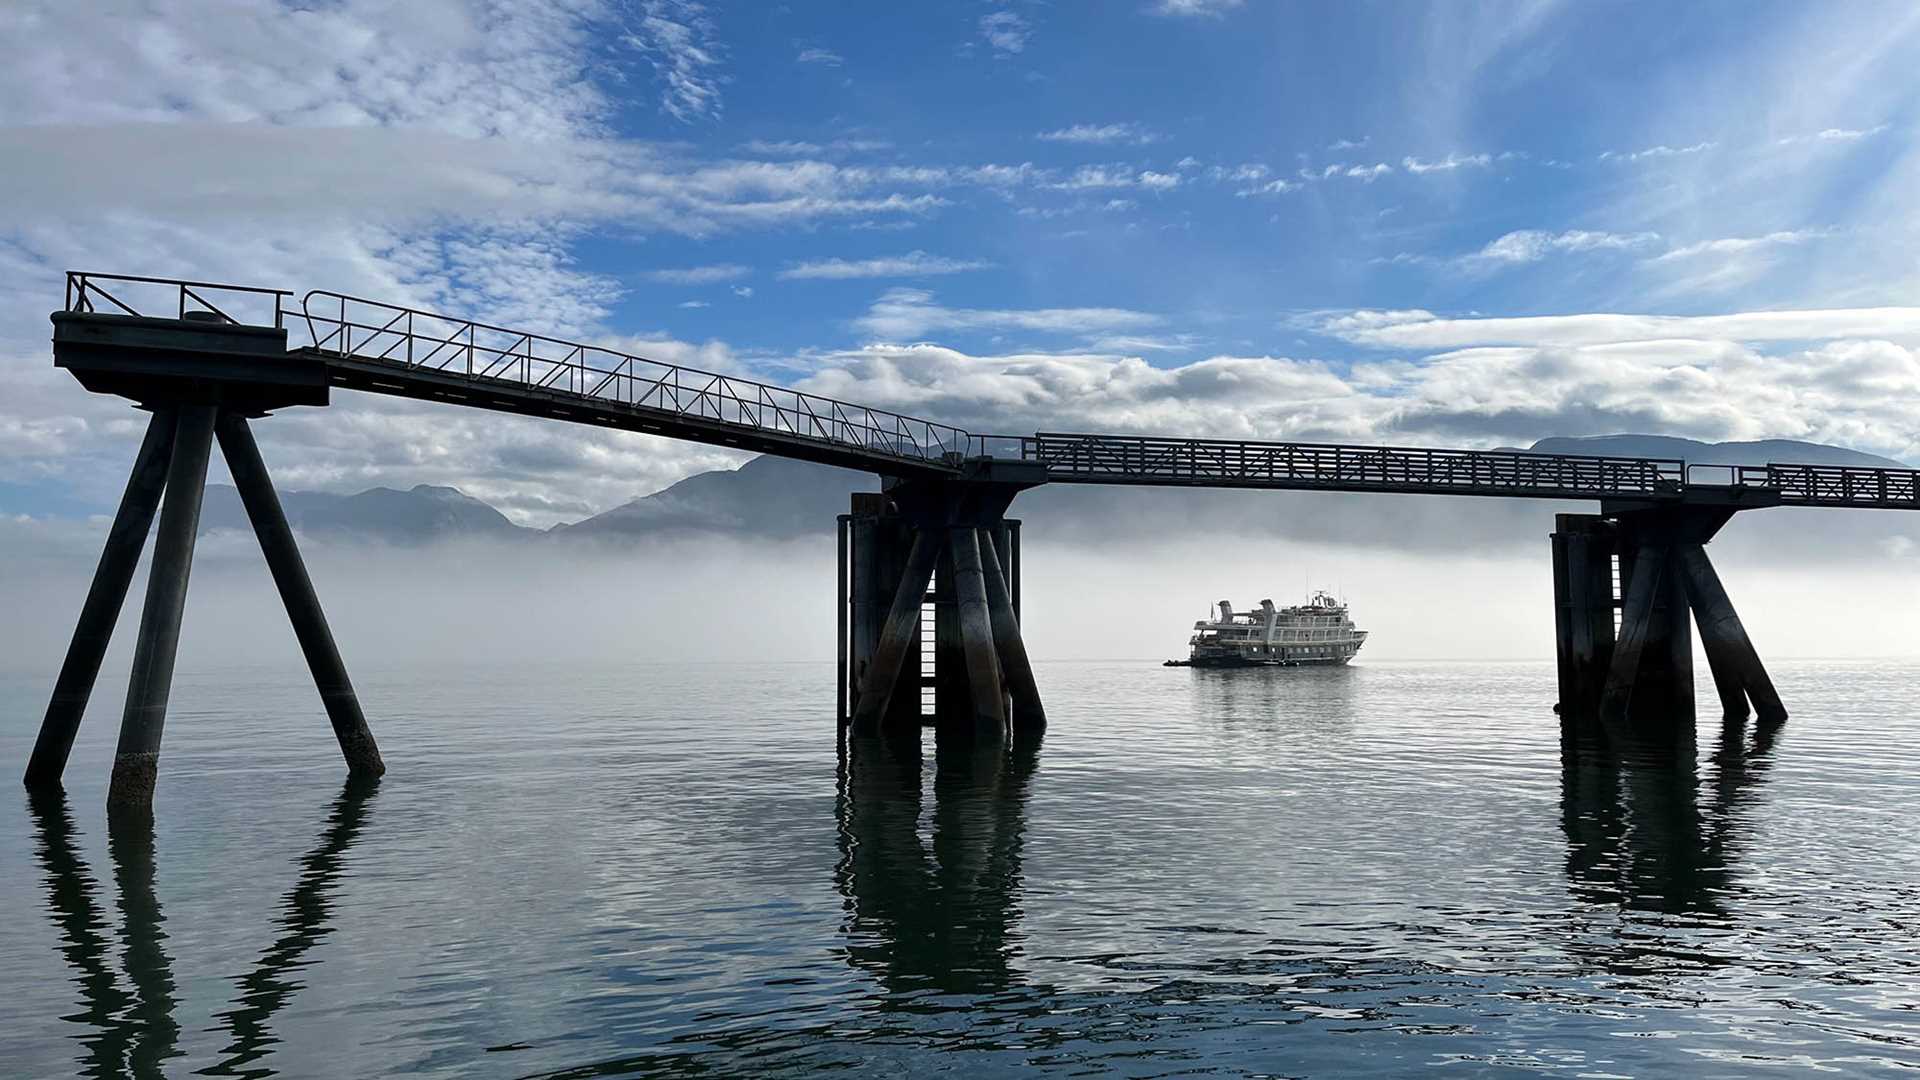 national geographic sea lion under a bridge